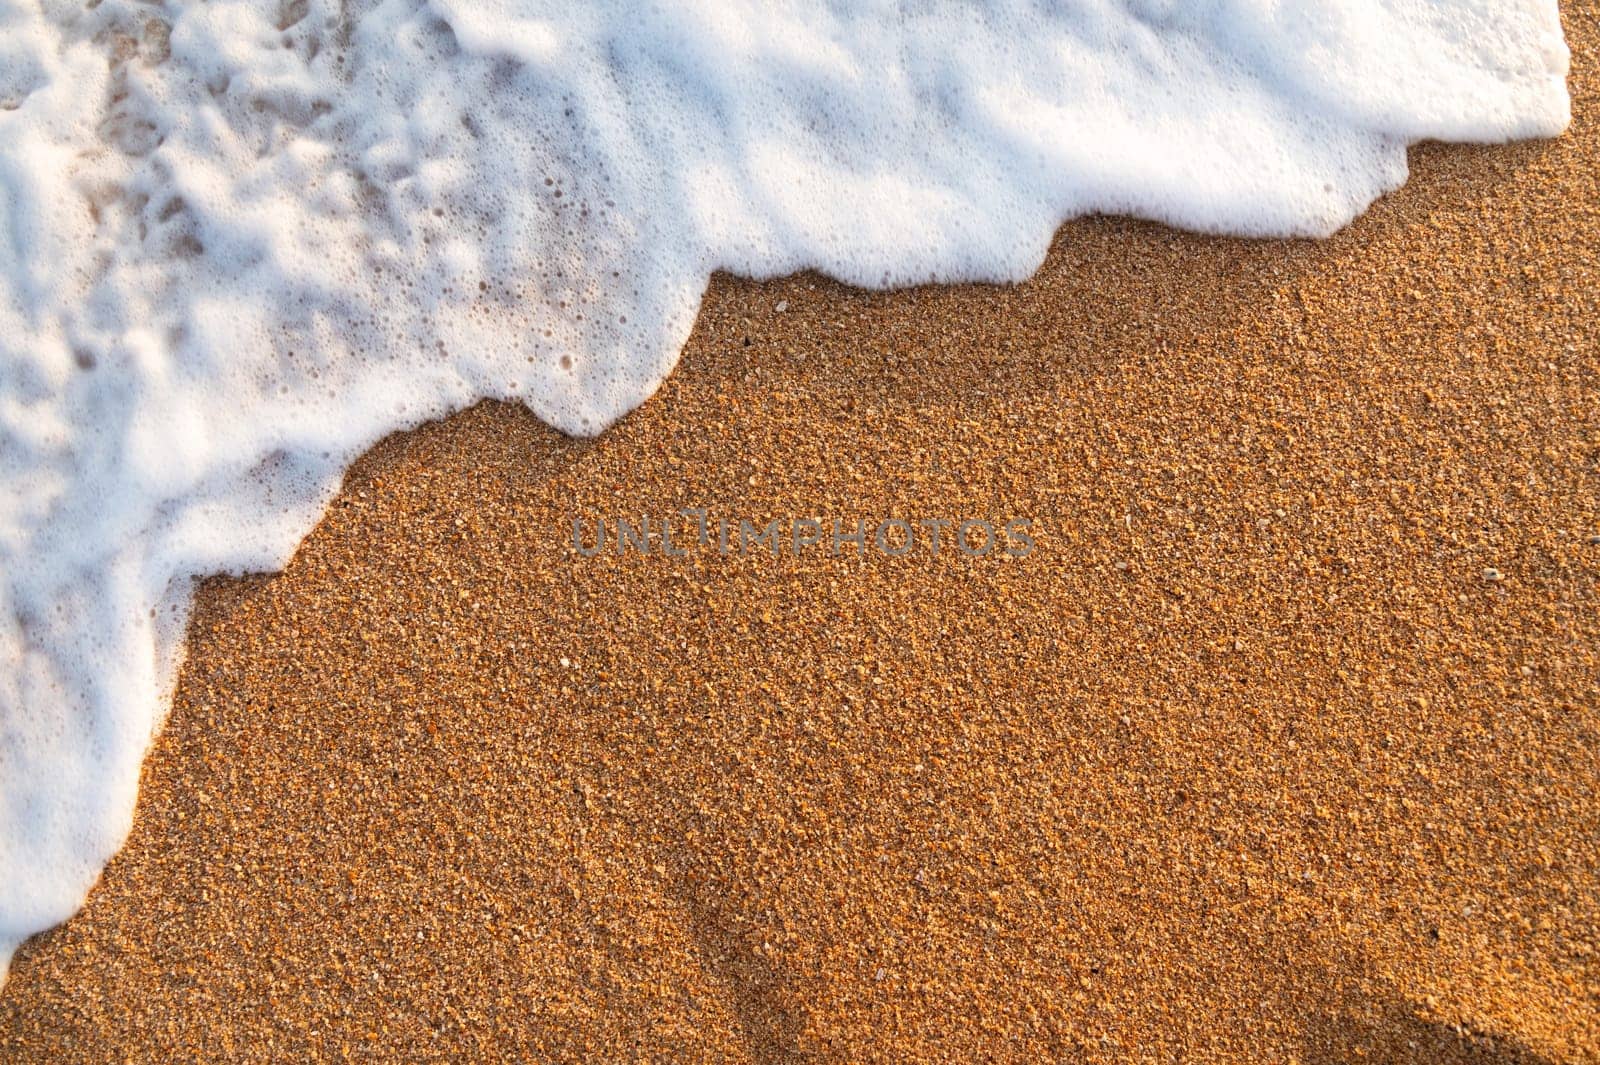 a wave rolls onto the sea beach with a splash. close-up white abundant foam lies on golden sandy sand, top view